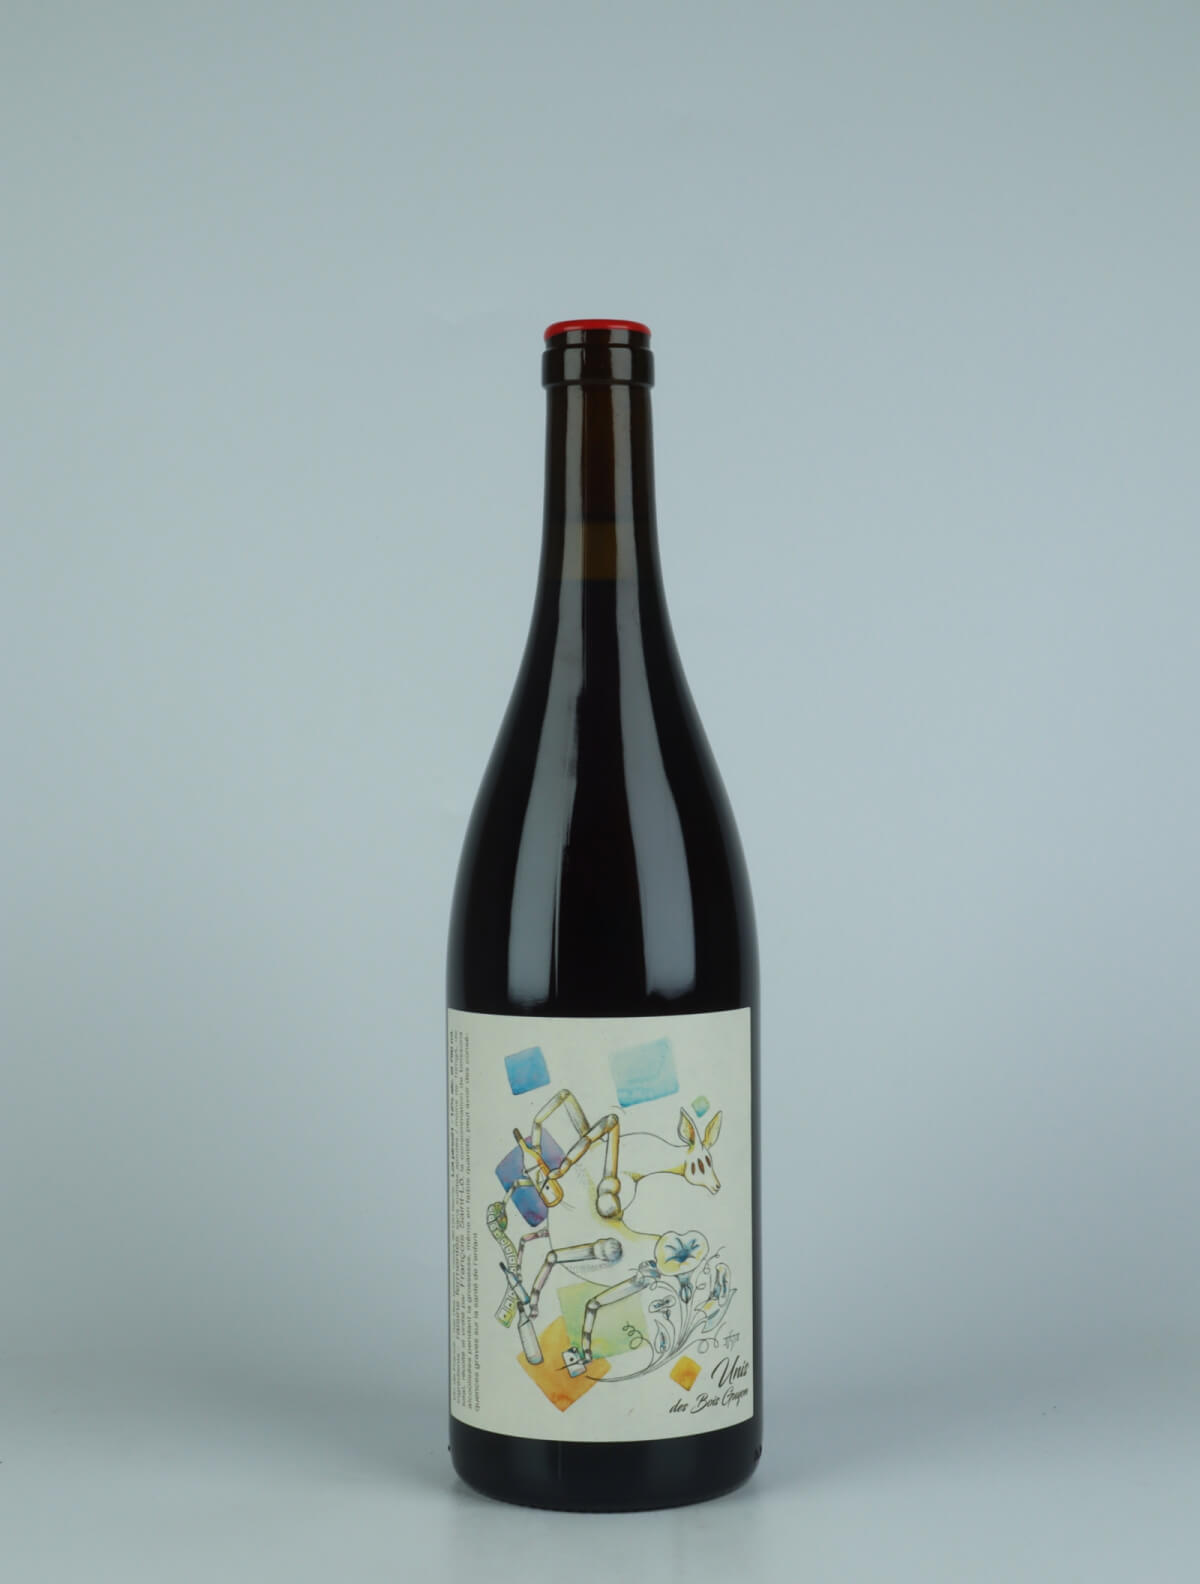 A bottle 2021 Pineau d'Aunis Red wine from François Saint-Lô, Loire in France